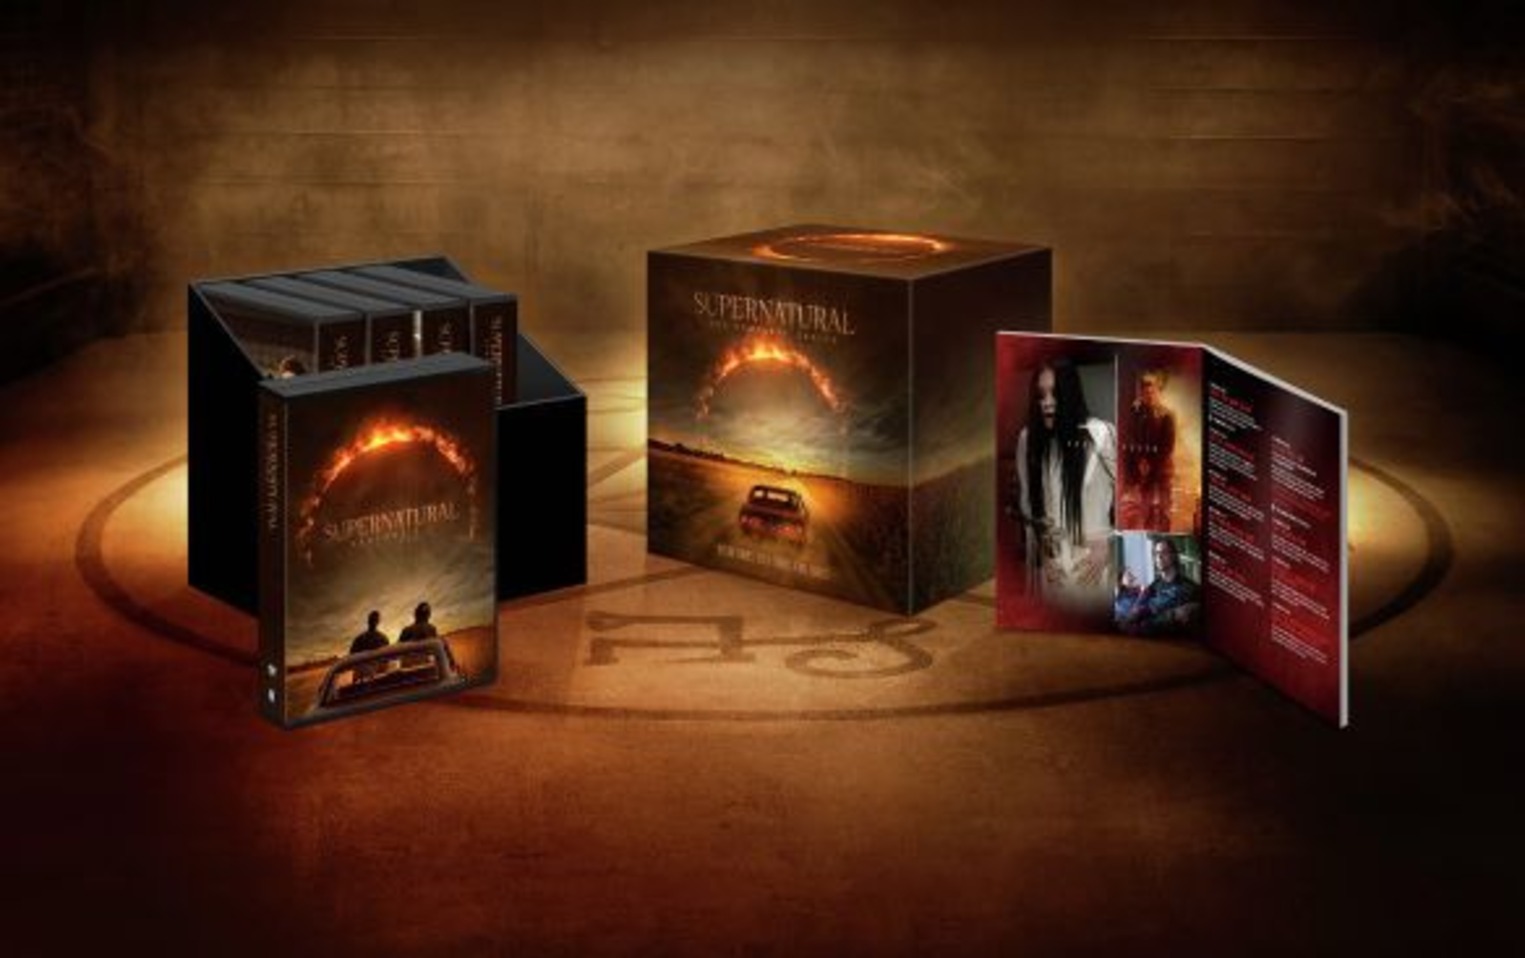 Supernatural: The Complete Series, Seasons 1-15 [DVD] Box Set, New